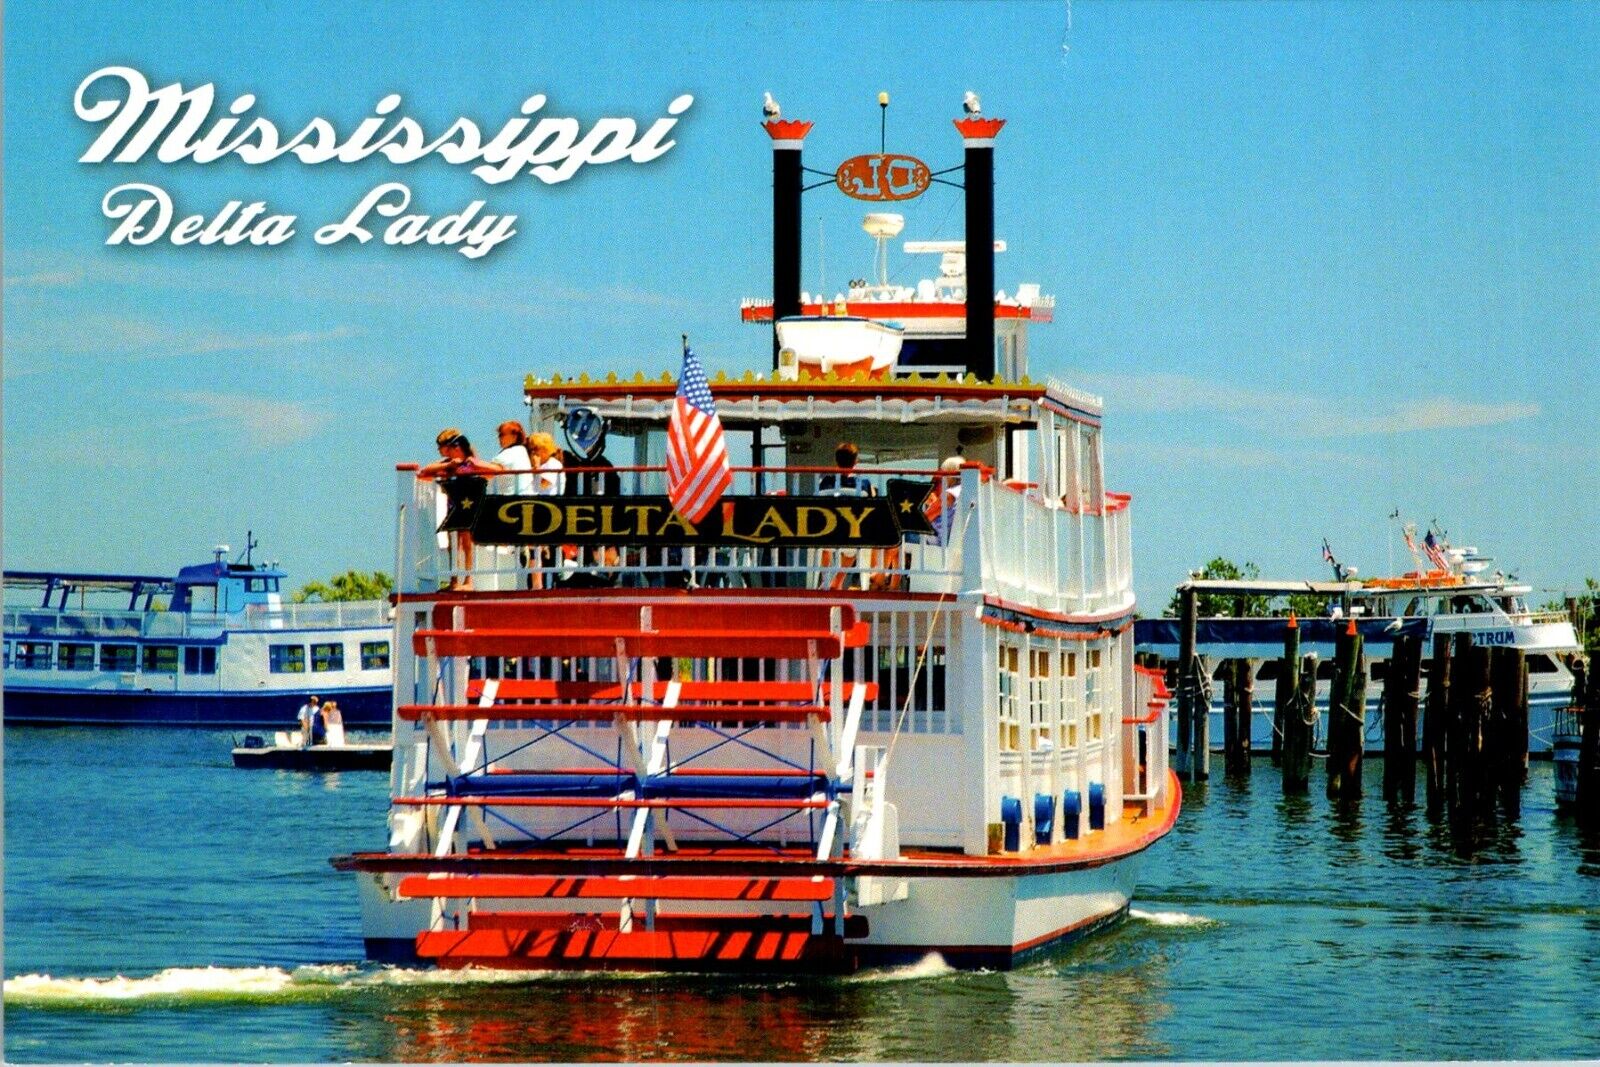 Mississippi River Delta Lady paddle boat photo postcard